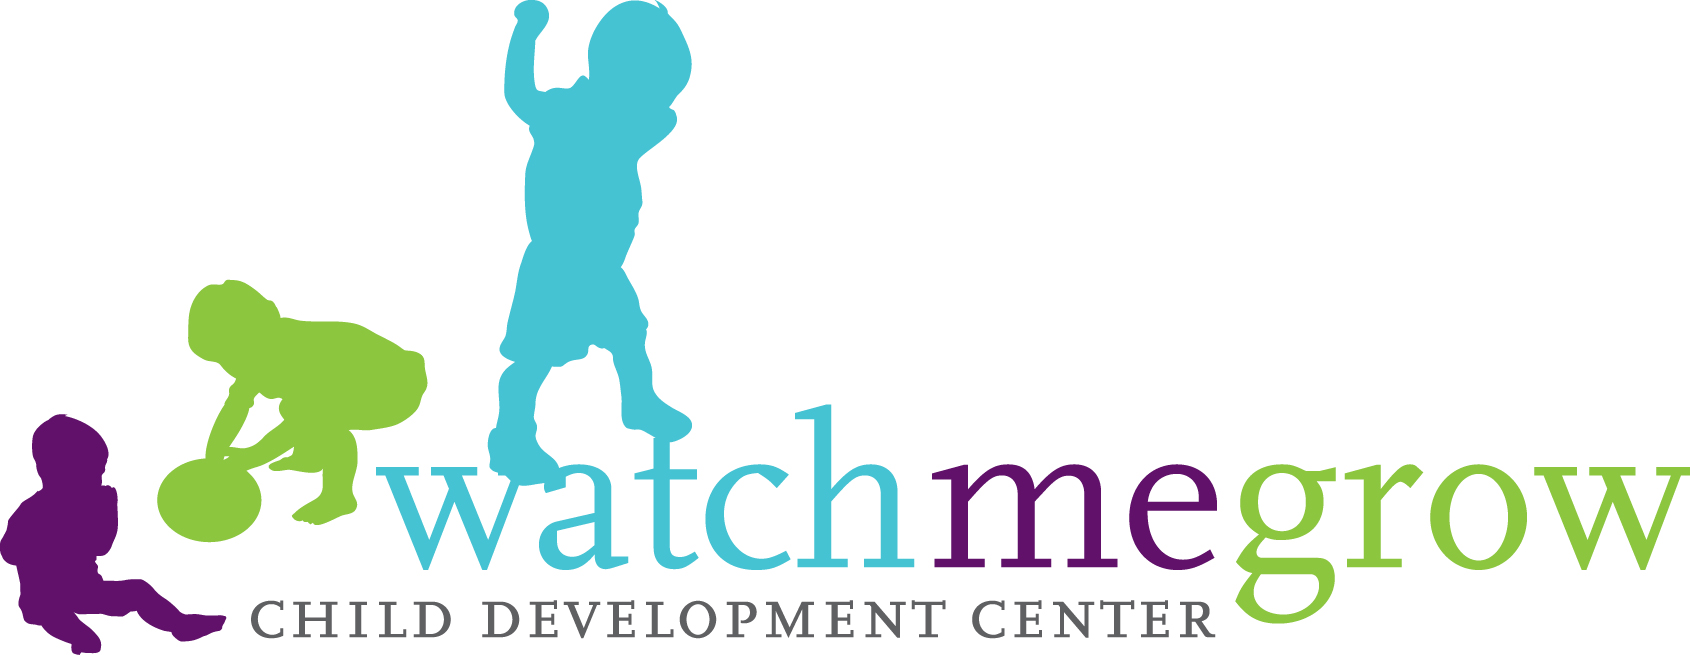 Watch Me Grow Child Development Center,